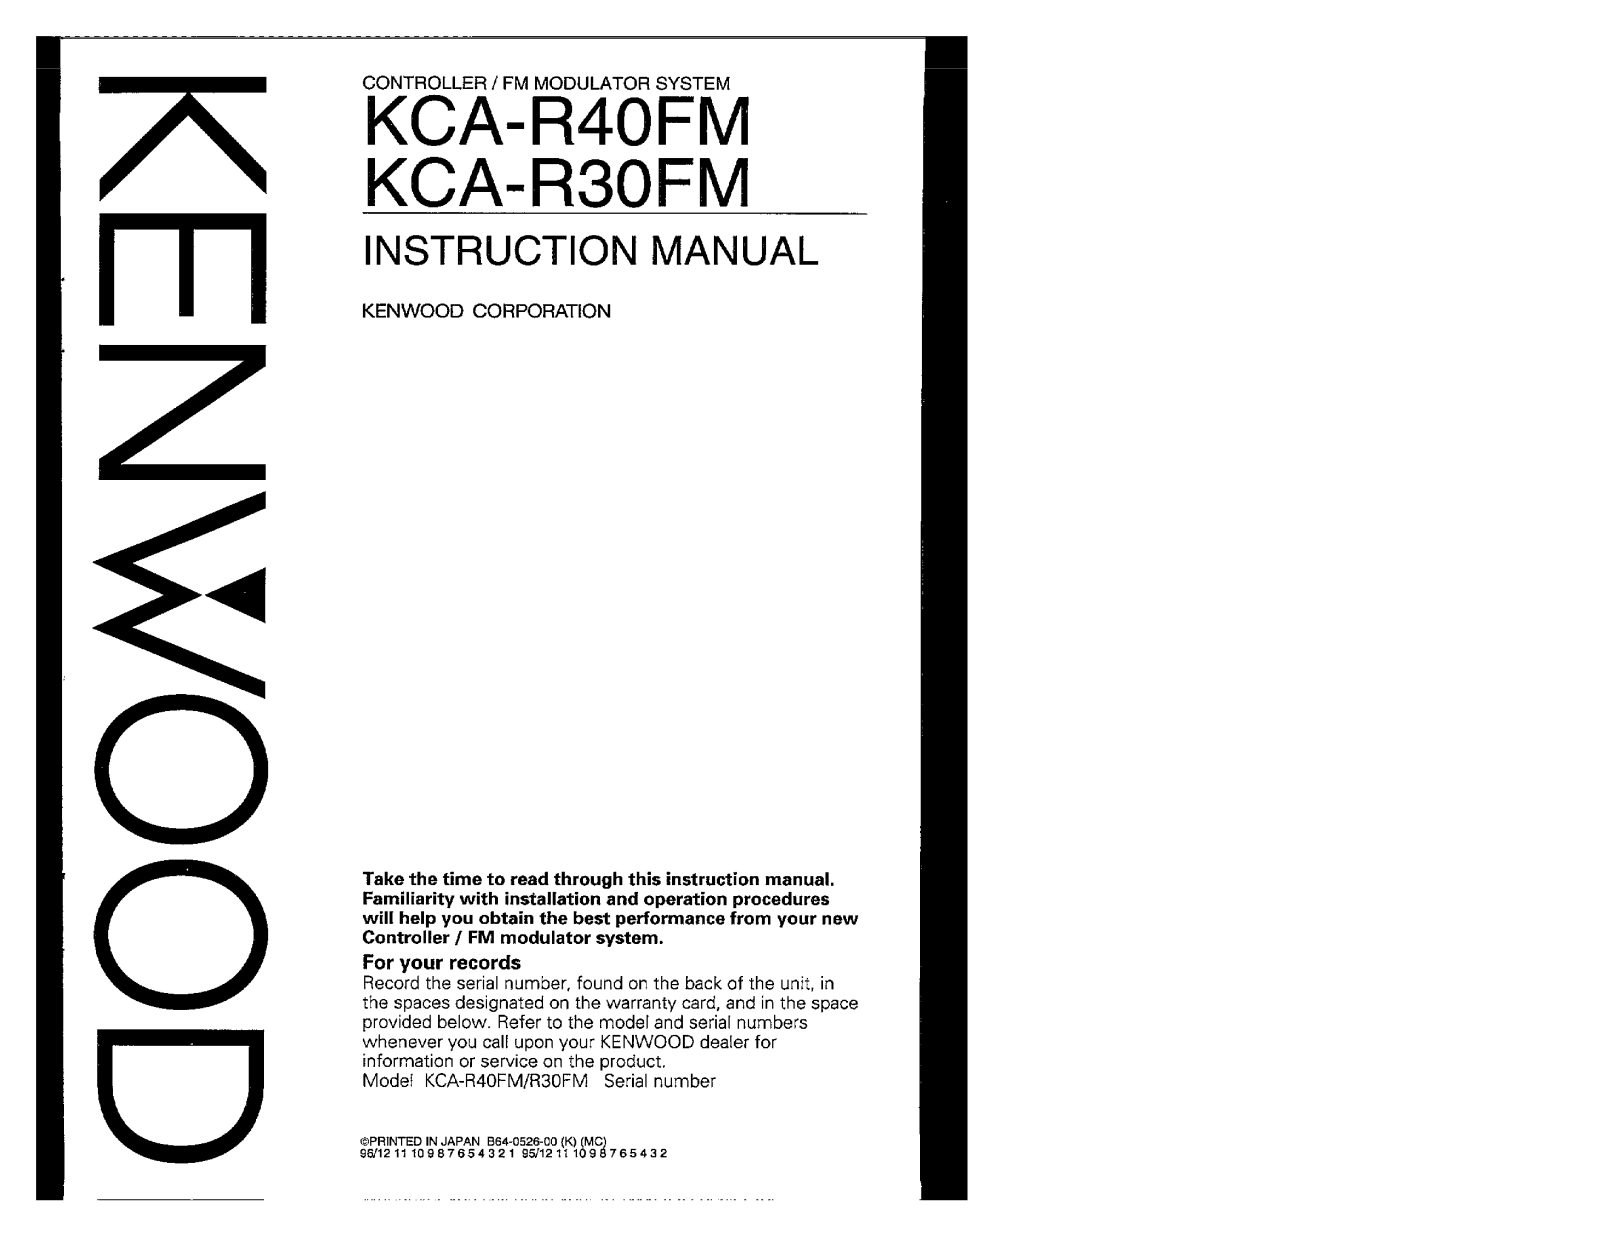 Kenwood KCA-R40FM, KCA-R30FM Owner's Manual